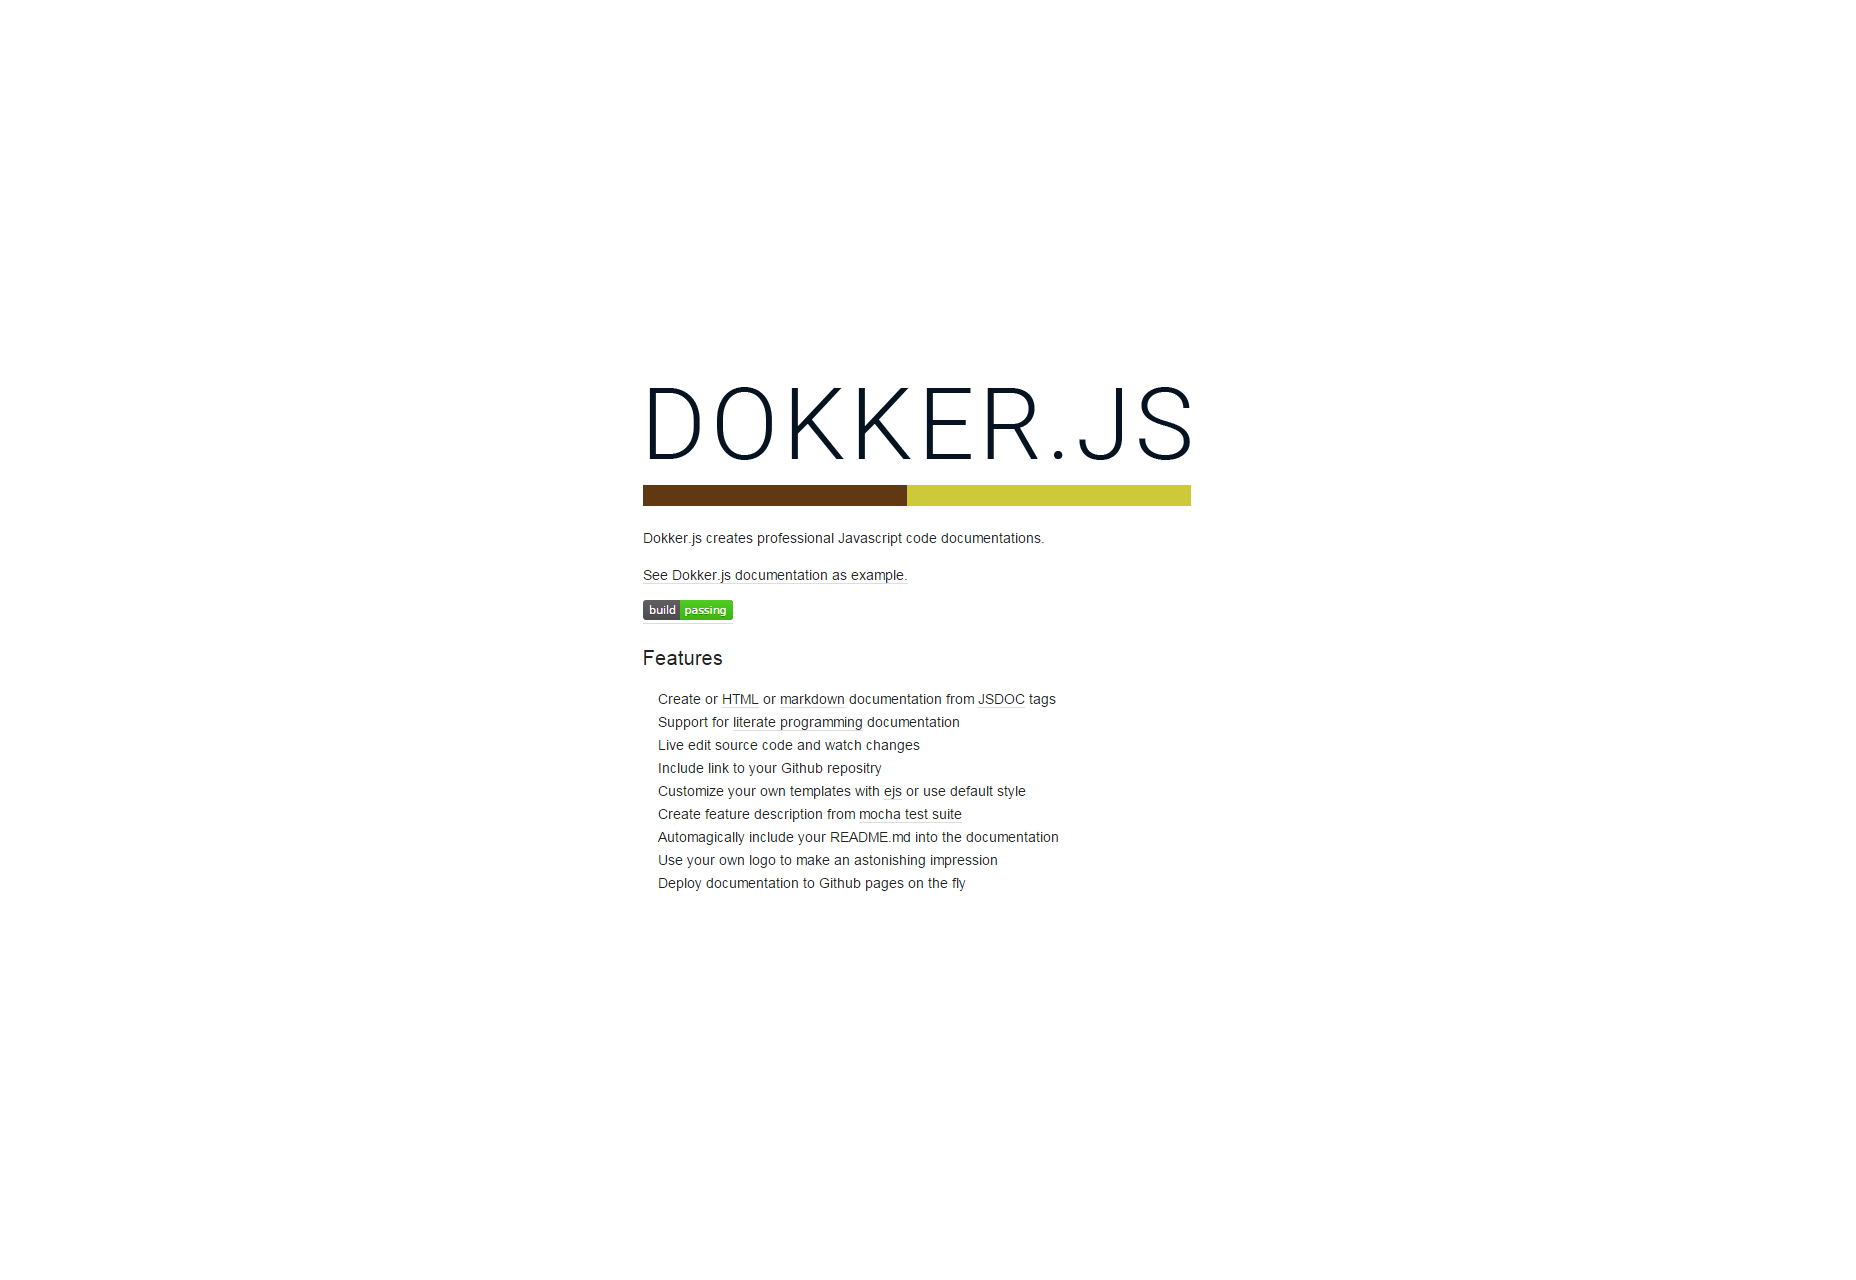 Dokker.js: Creador de documentación de código profesional de JavaScript